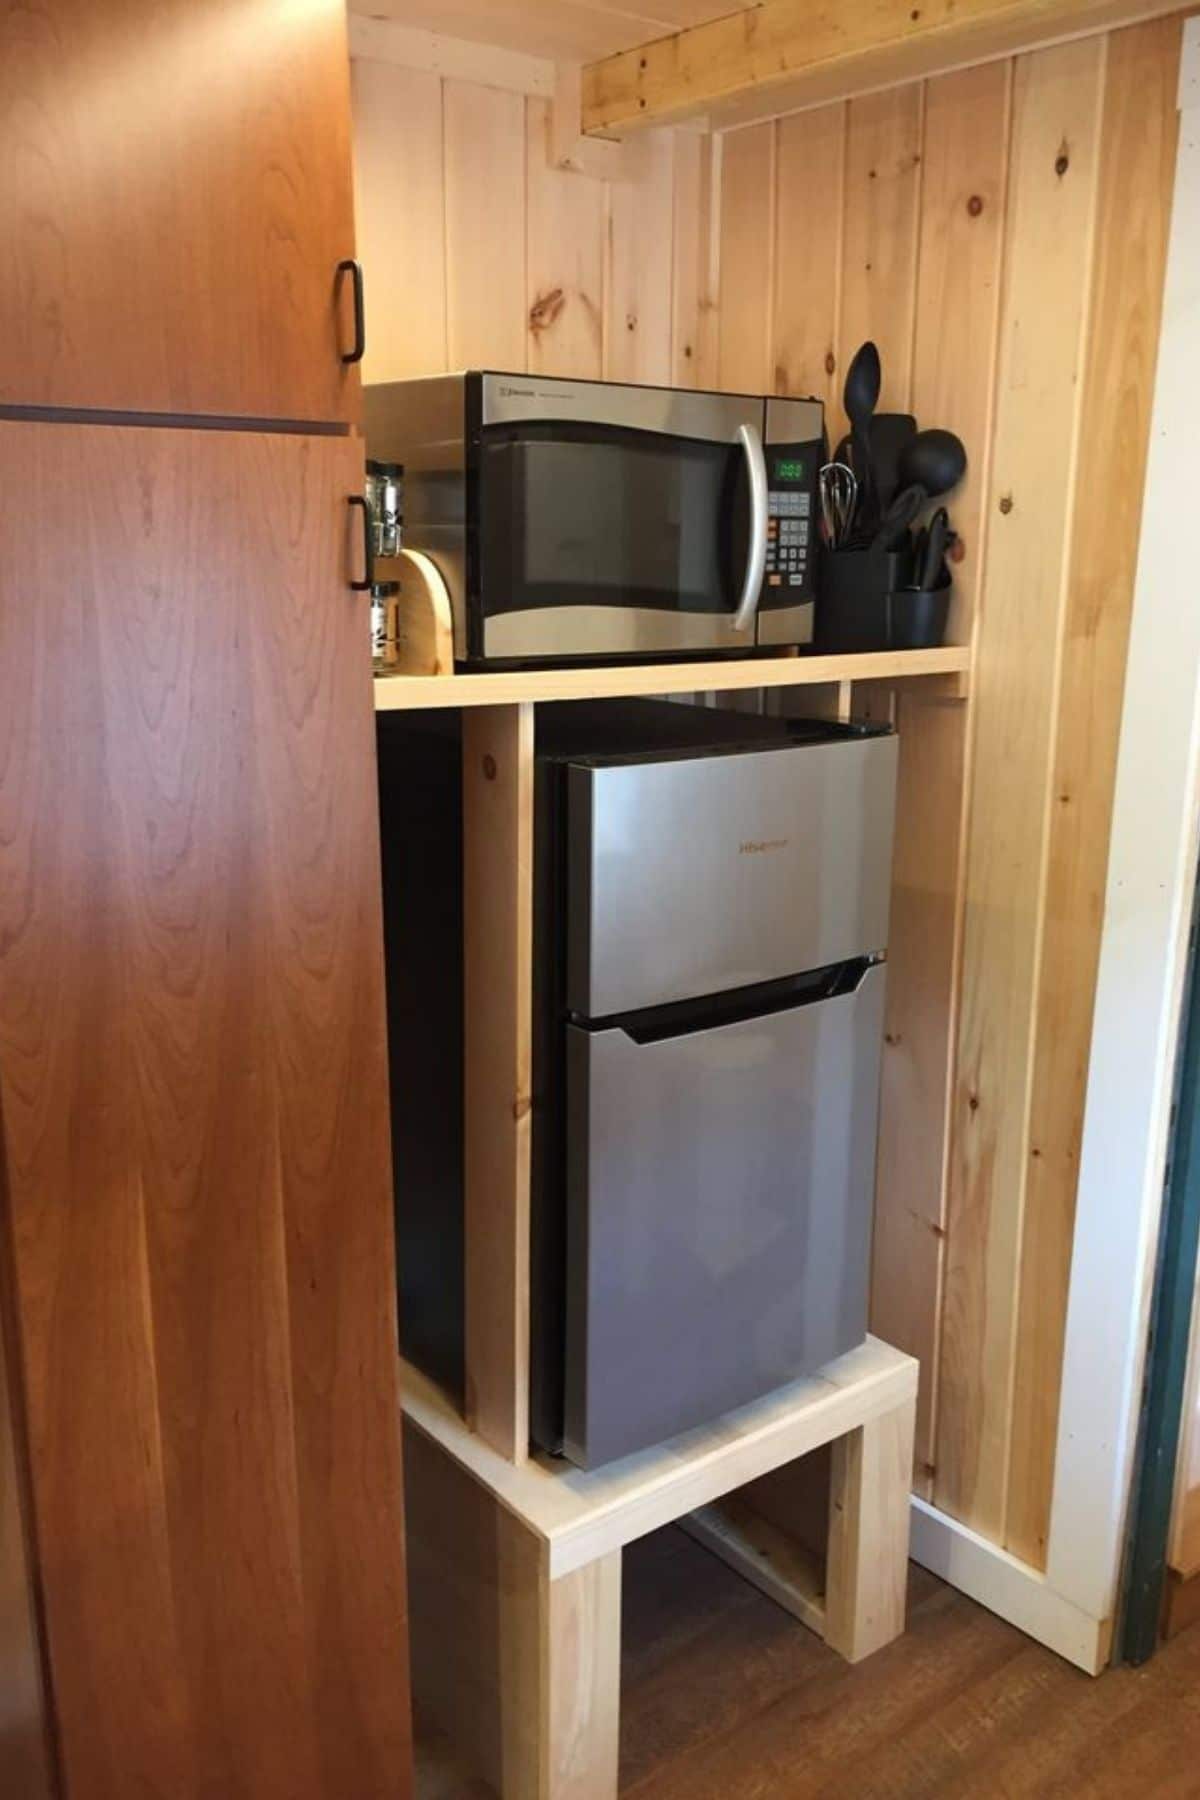 mini refrigerator on shelf below microwave by pantry